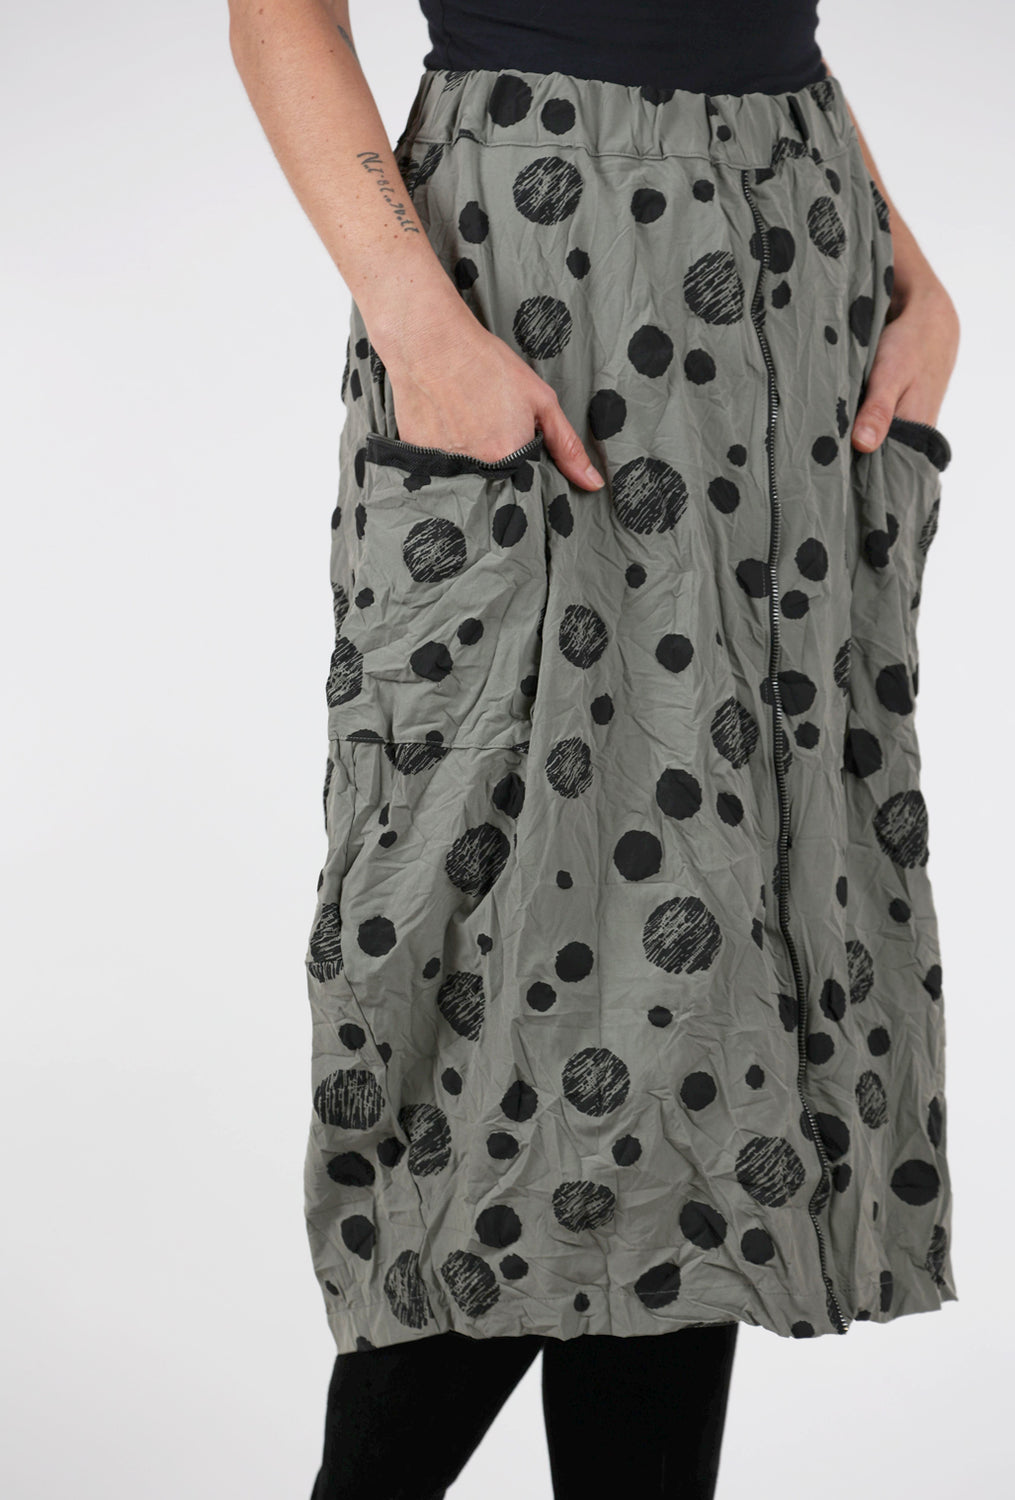 Chalet Arizona Skirt, Elephant Gray 